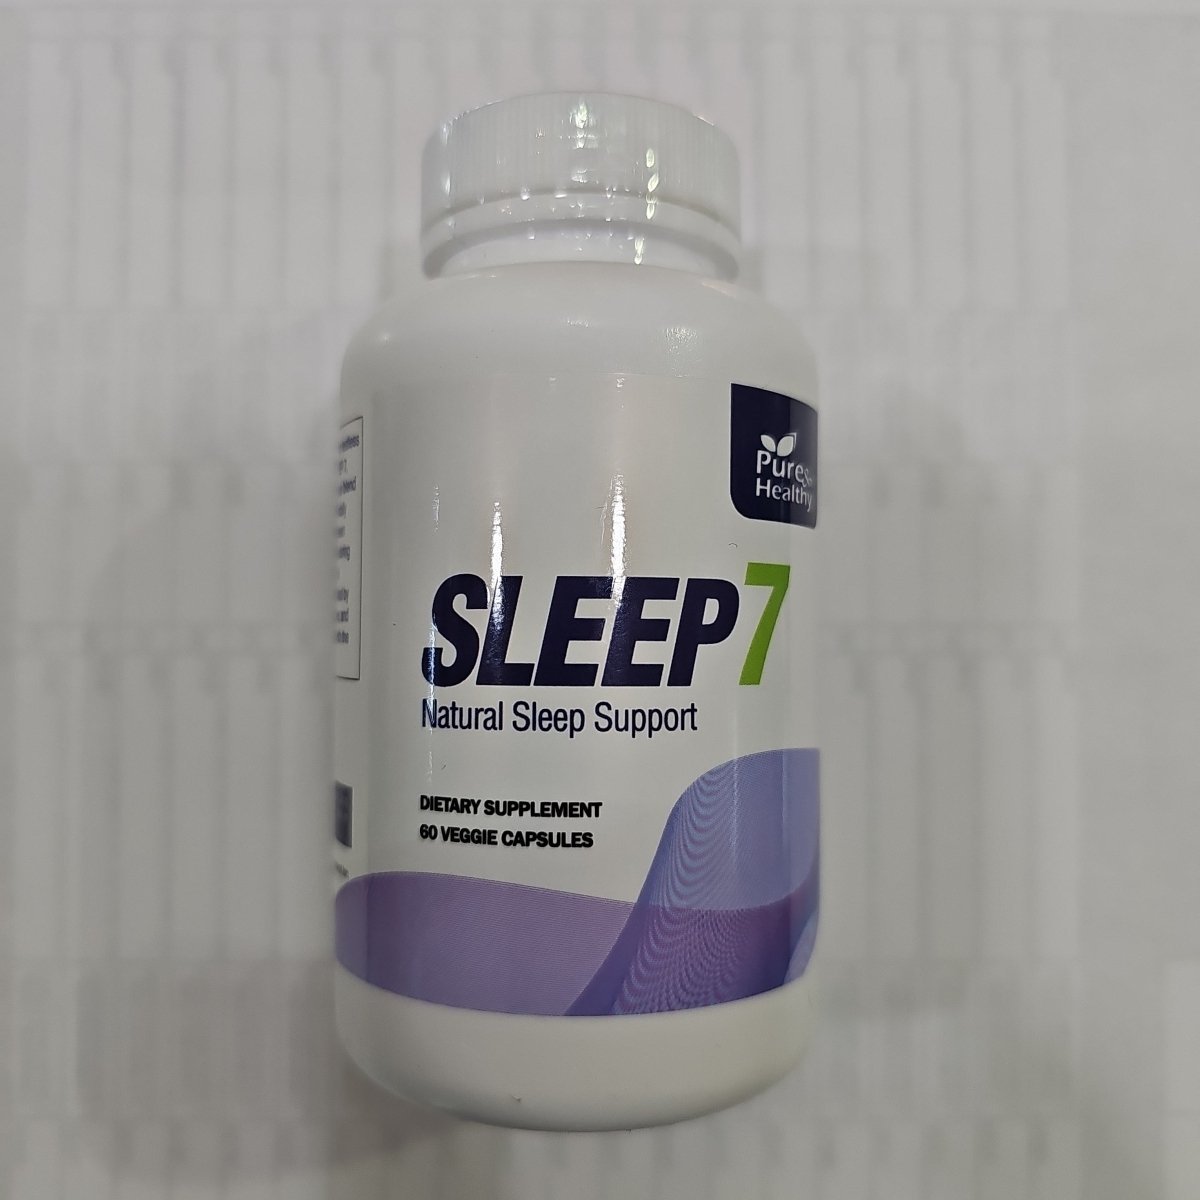 Sleep 7 - Natural Sleep Support - 60 VCap